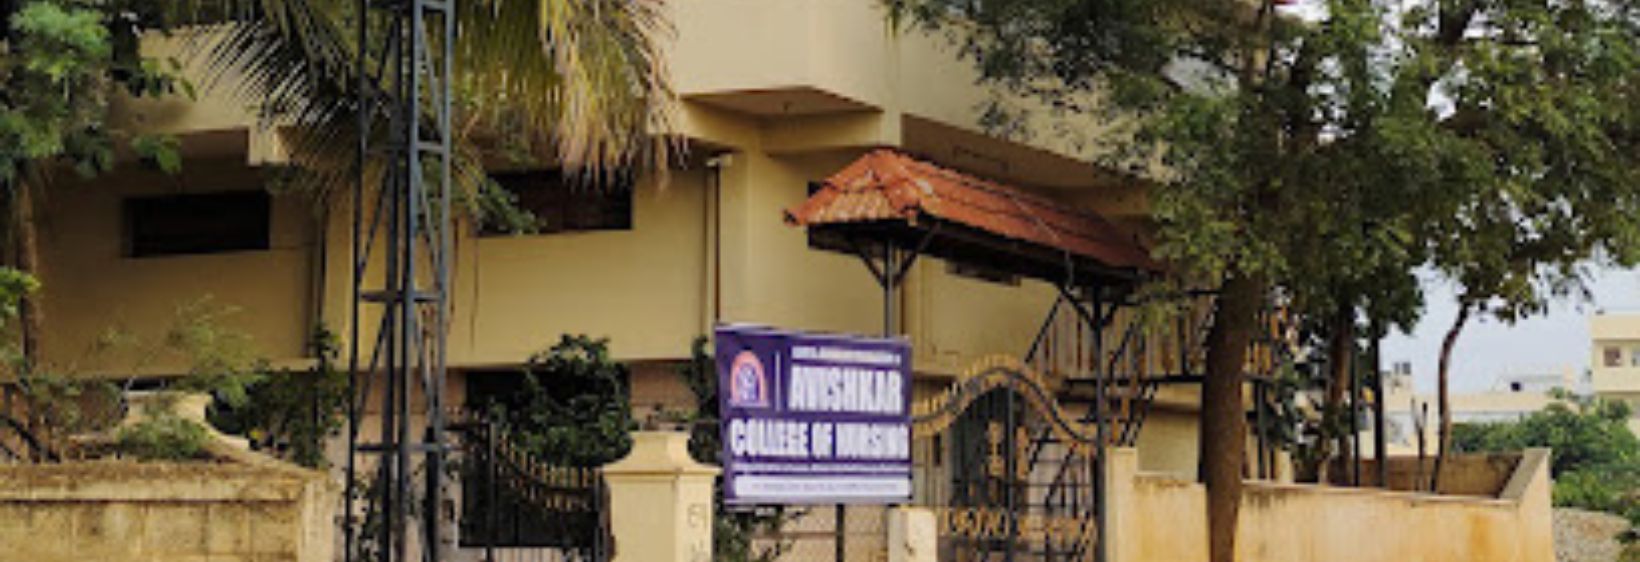 Avishkar College of Nursing - Bangalore